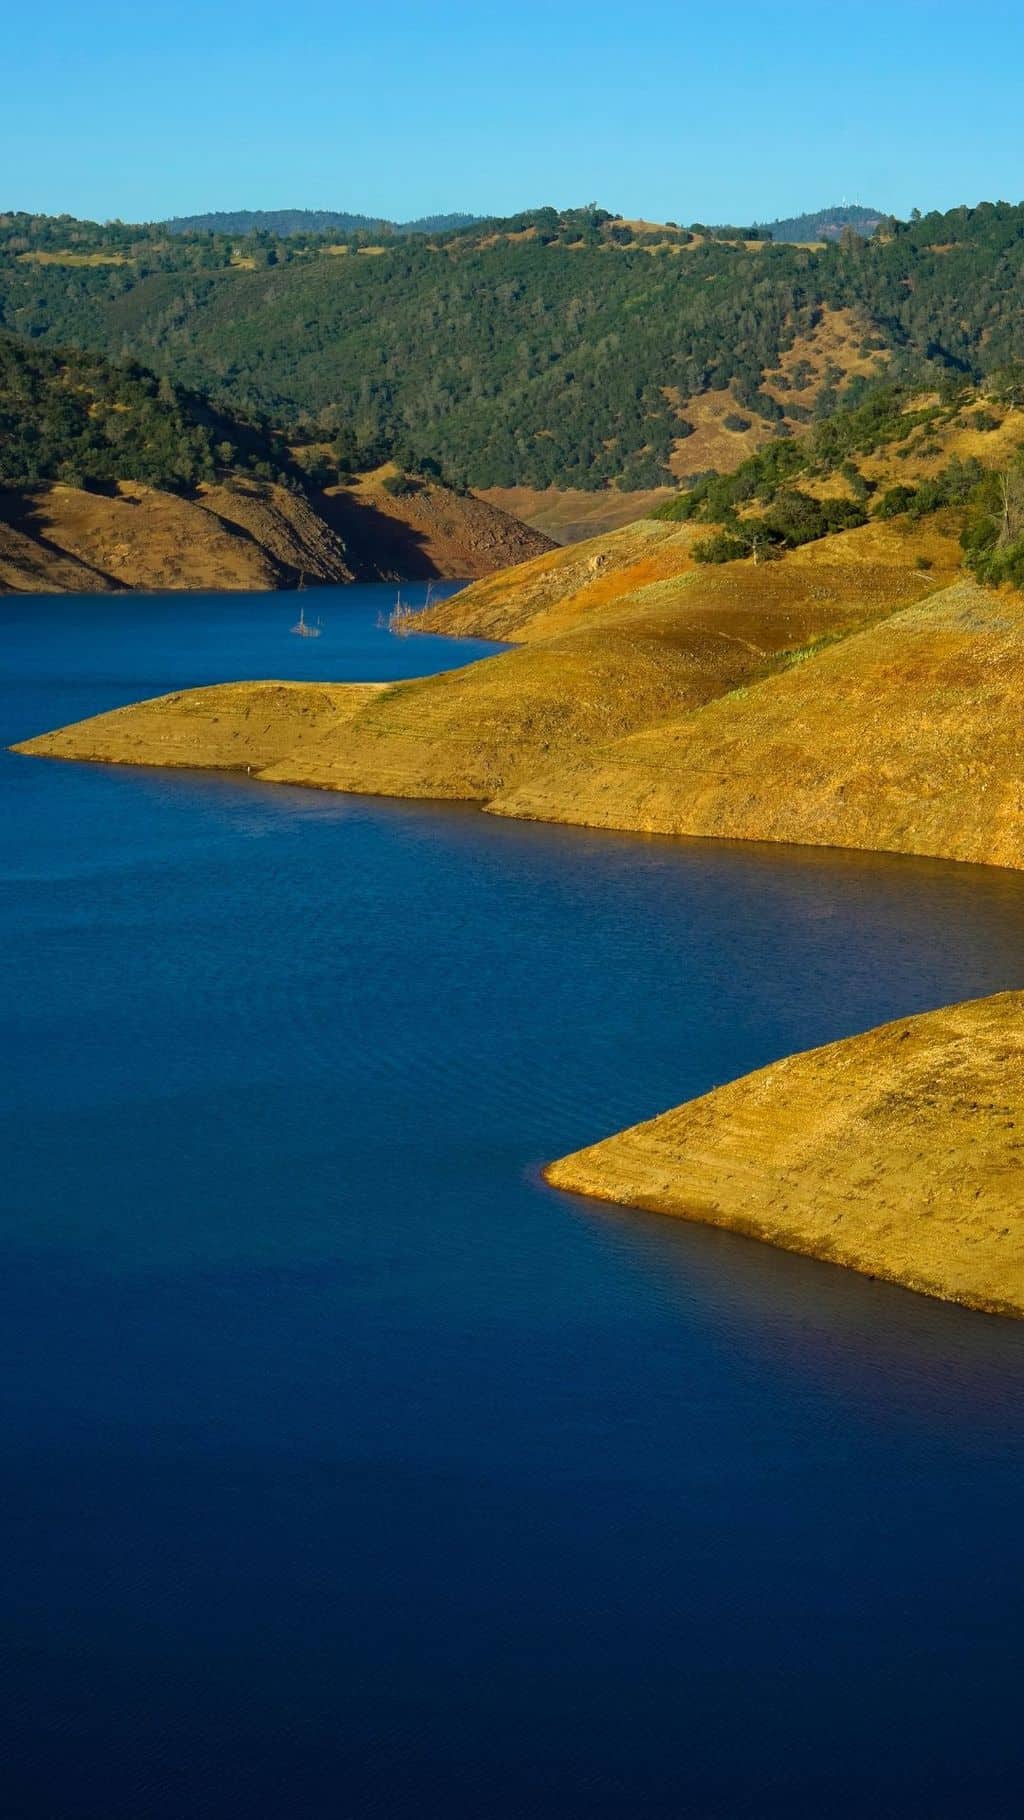 https://www.bestfishinginamerica.com/wp-content/uploads/2021/04/california-new-melones-lake-vertical-rivernorthphotography-canva.jpg